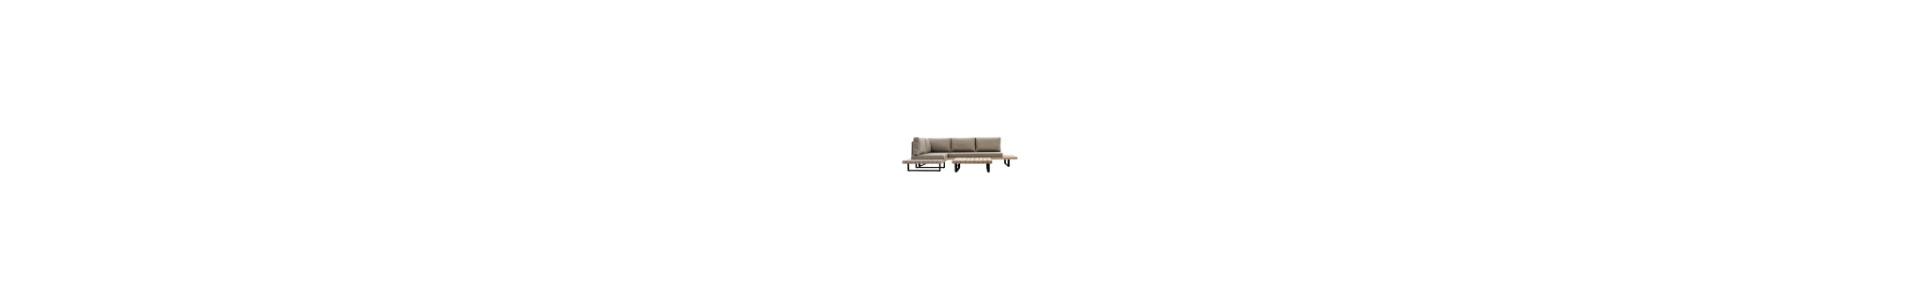 Modular sofas